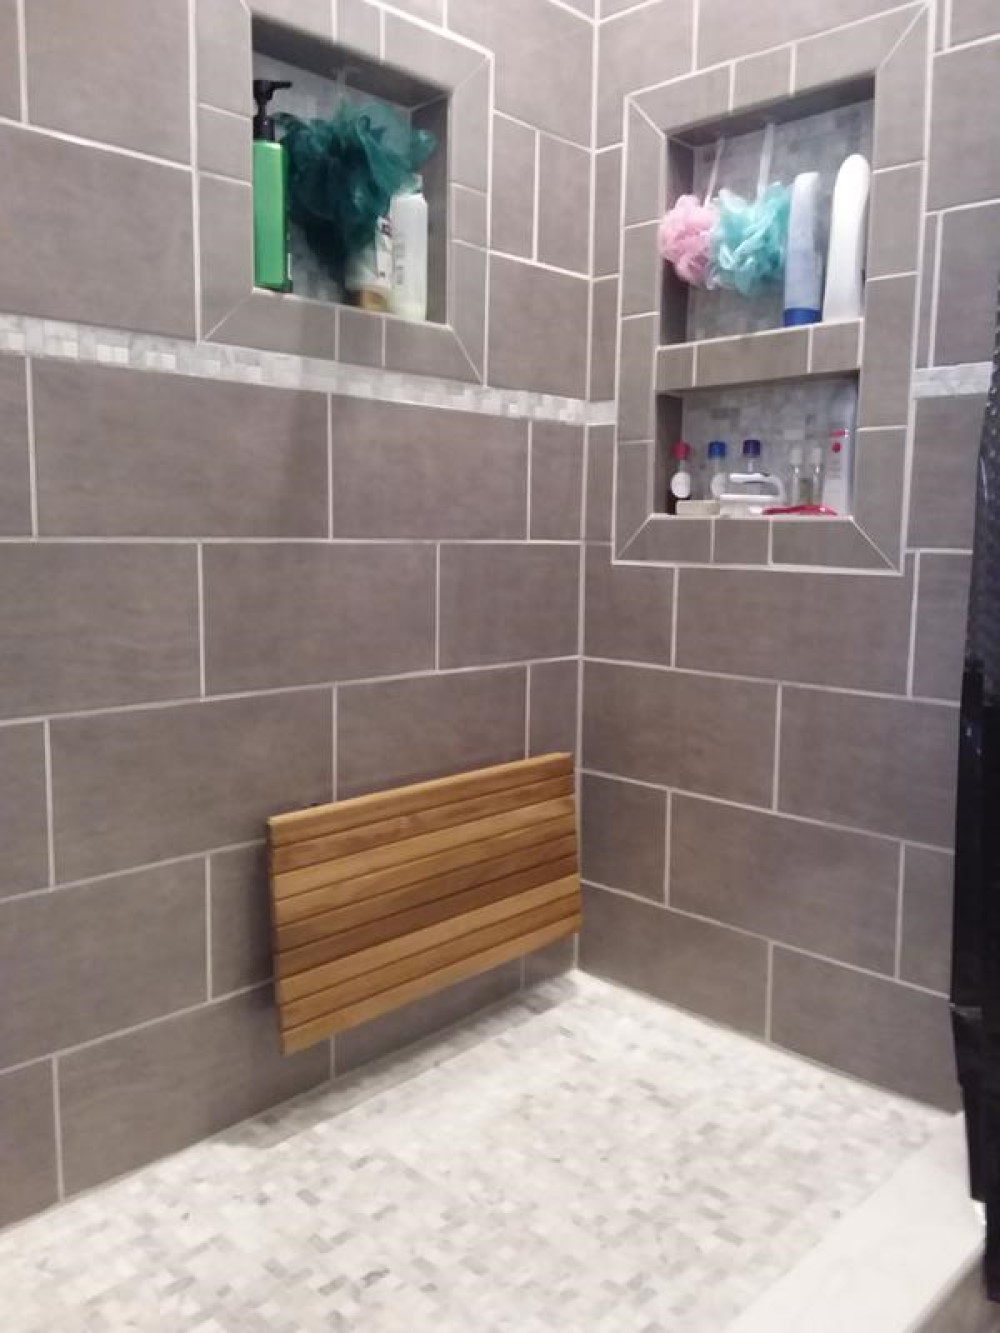 24" Premium Wall Mount Teak Shower Bench